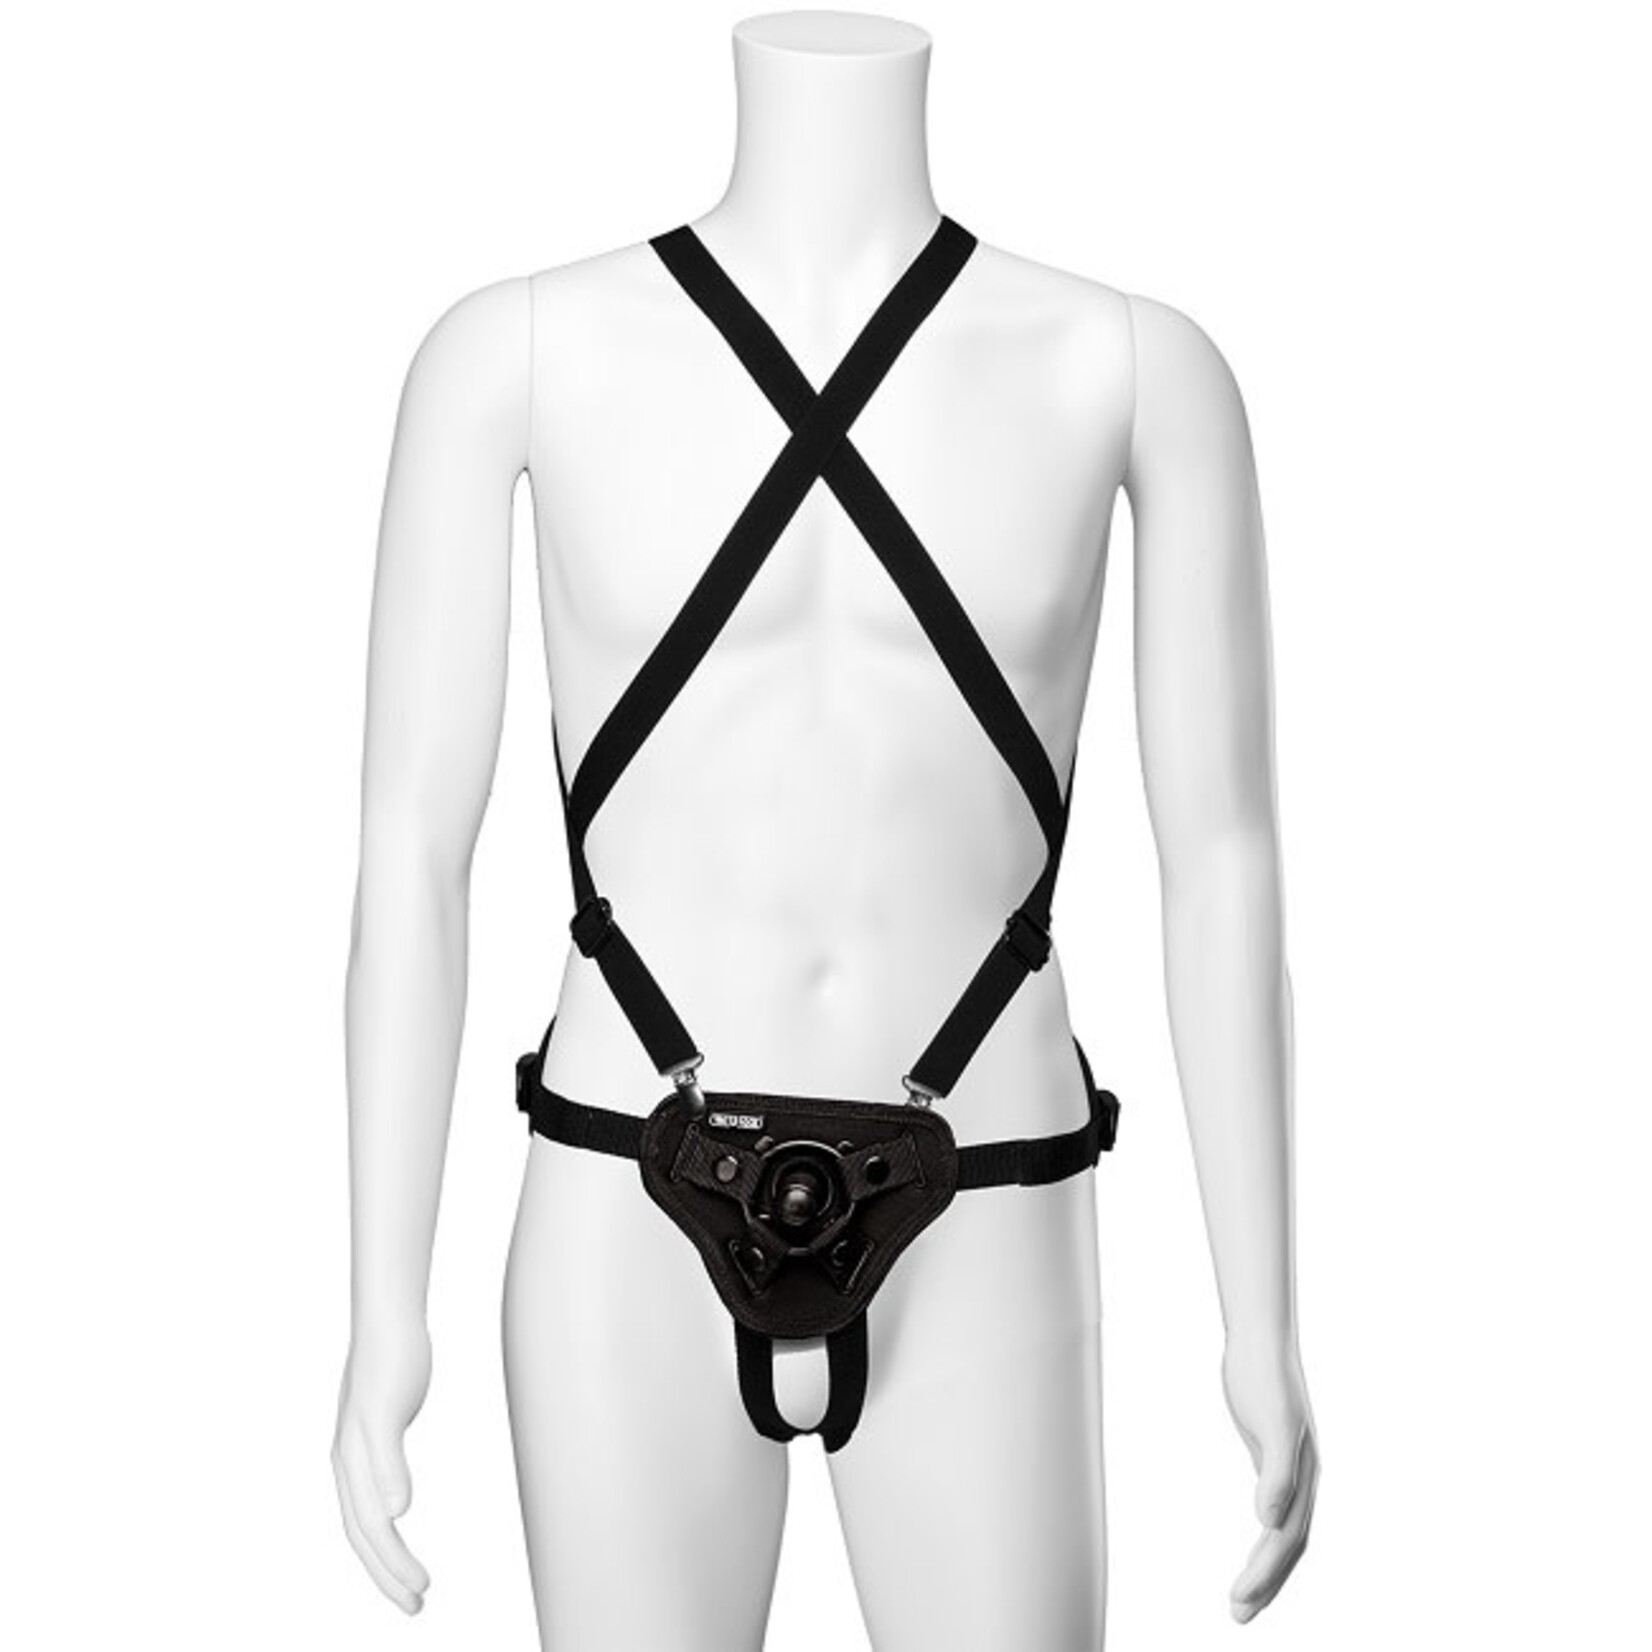 Doc Johnson Vac-U-Lock Suspender Harness with Plug